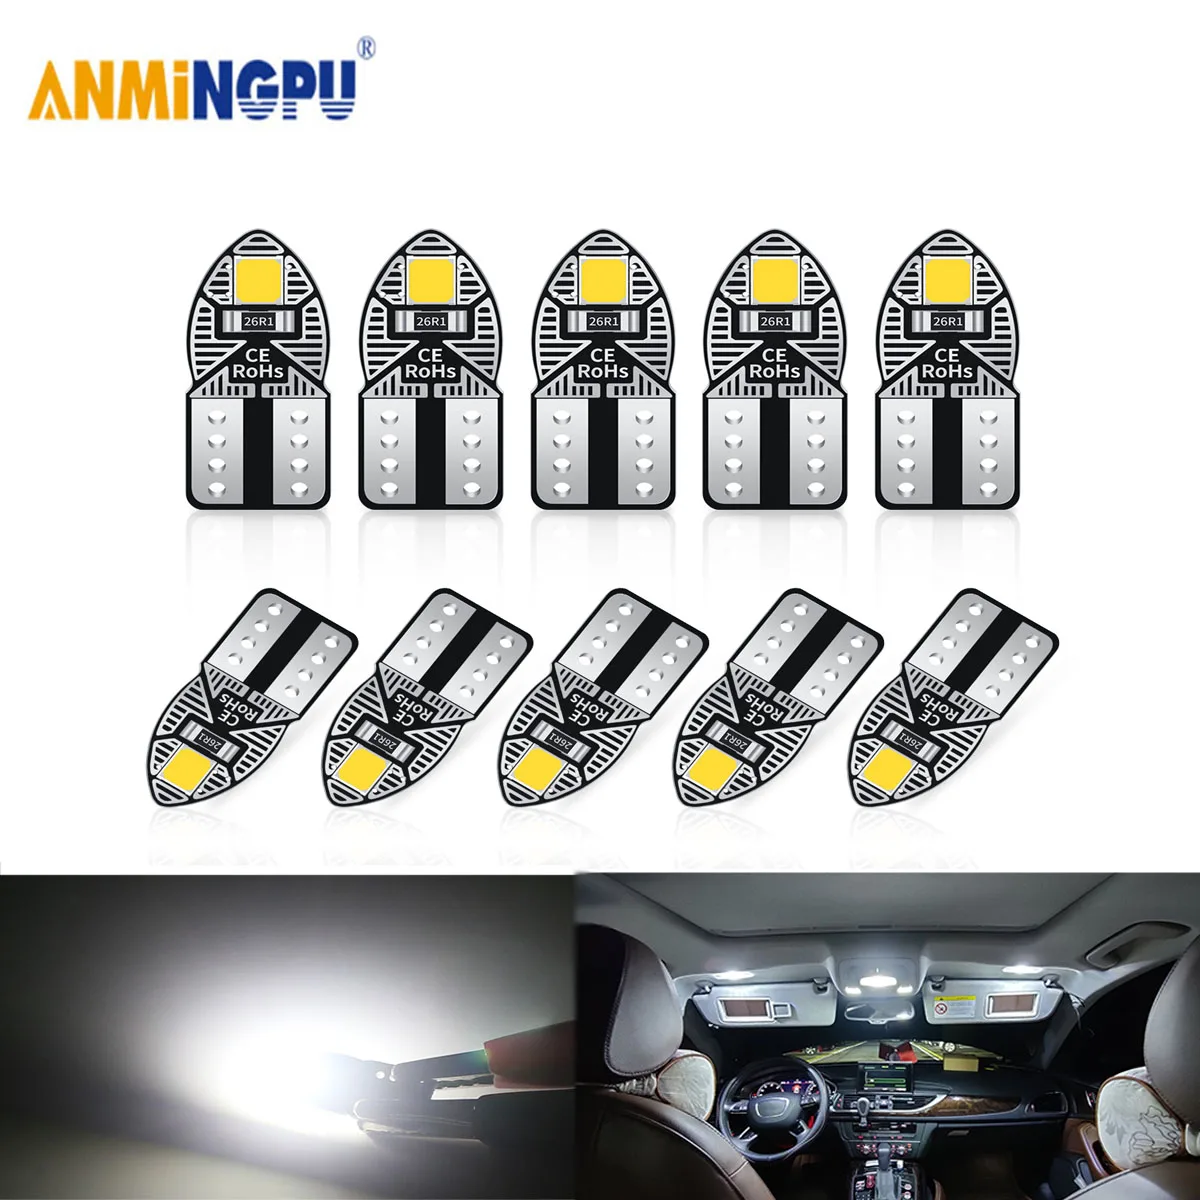 

ANMINGPU 10Pcs T10 W5W LED Canbus Error Free Bulb 194 168 2SMD 2835 Chip Cars Interior Light Auto Reading Lamps Signal Lamp 12V